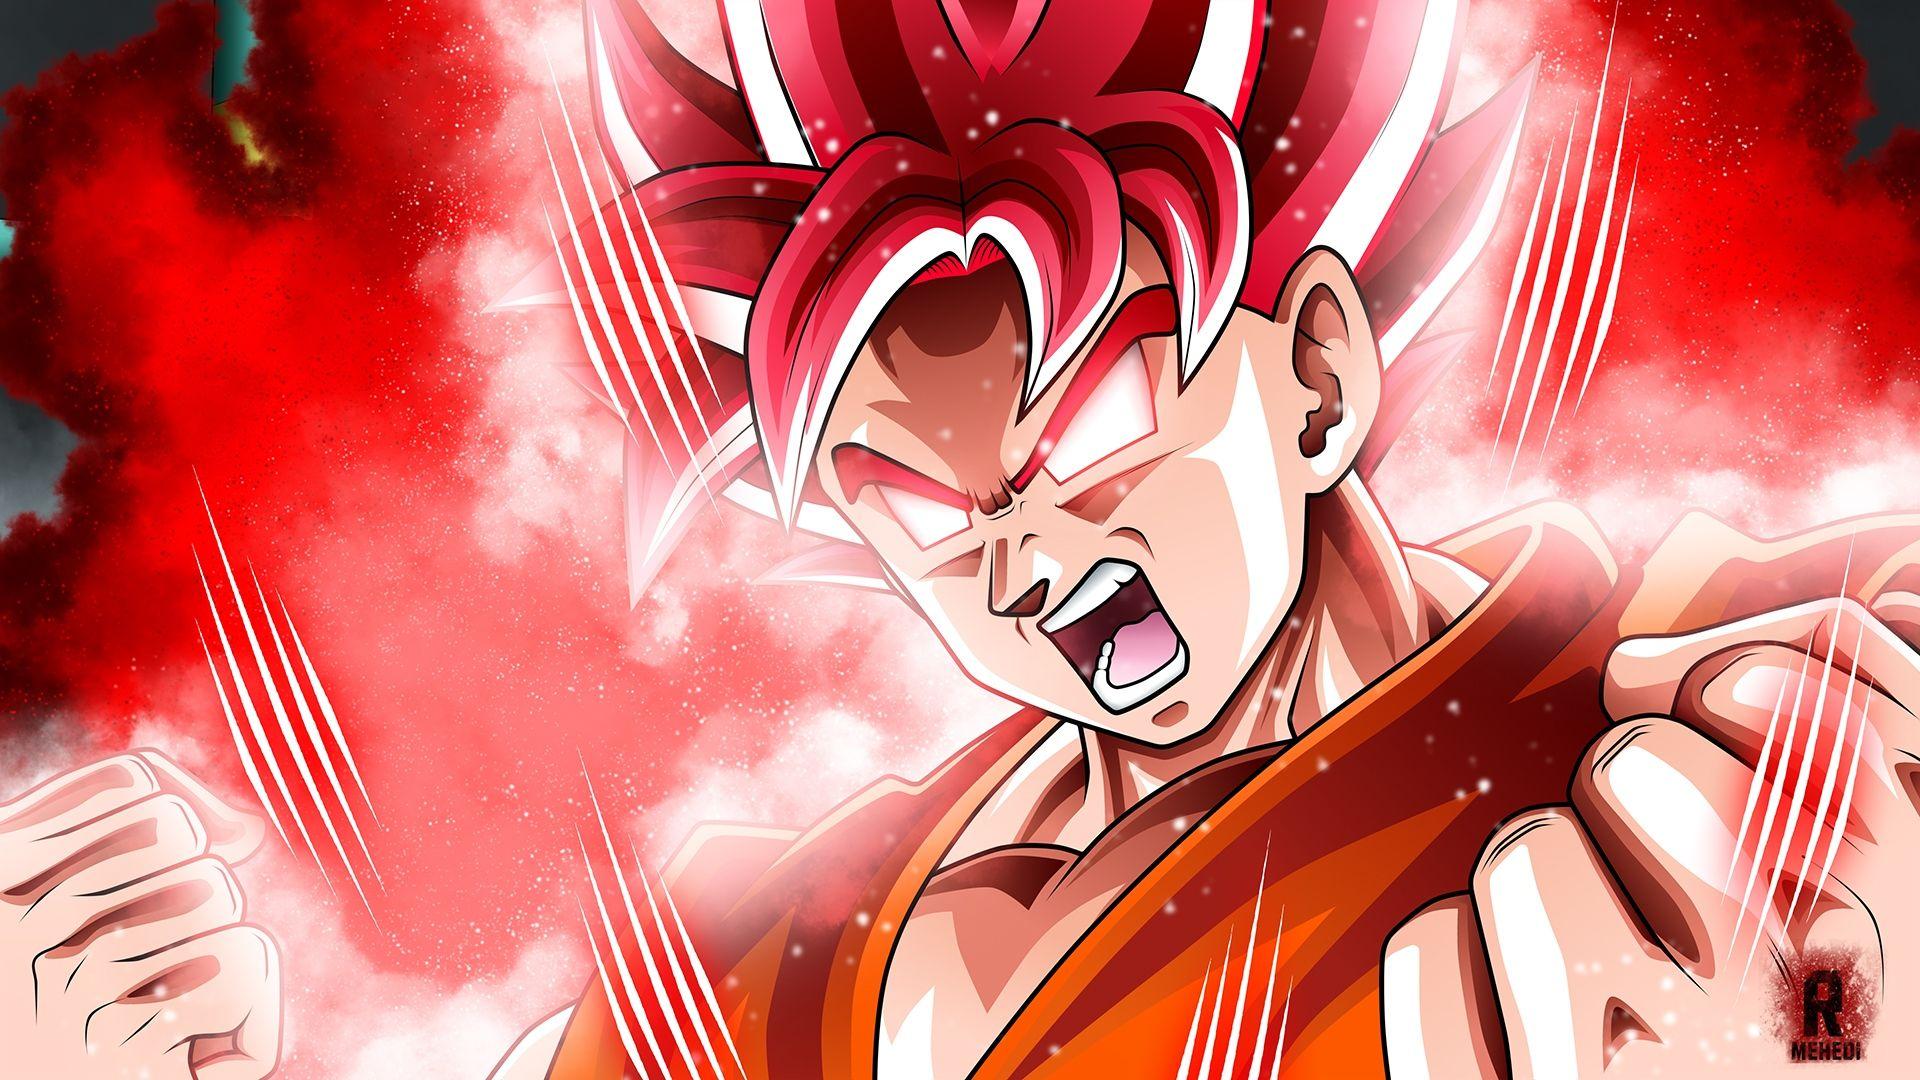 Goku Super Saiyan God DBS Wallpaper